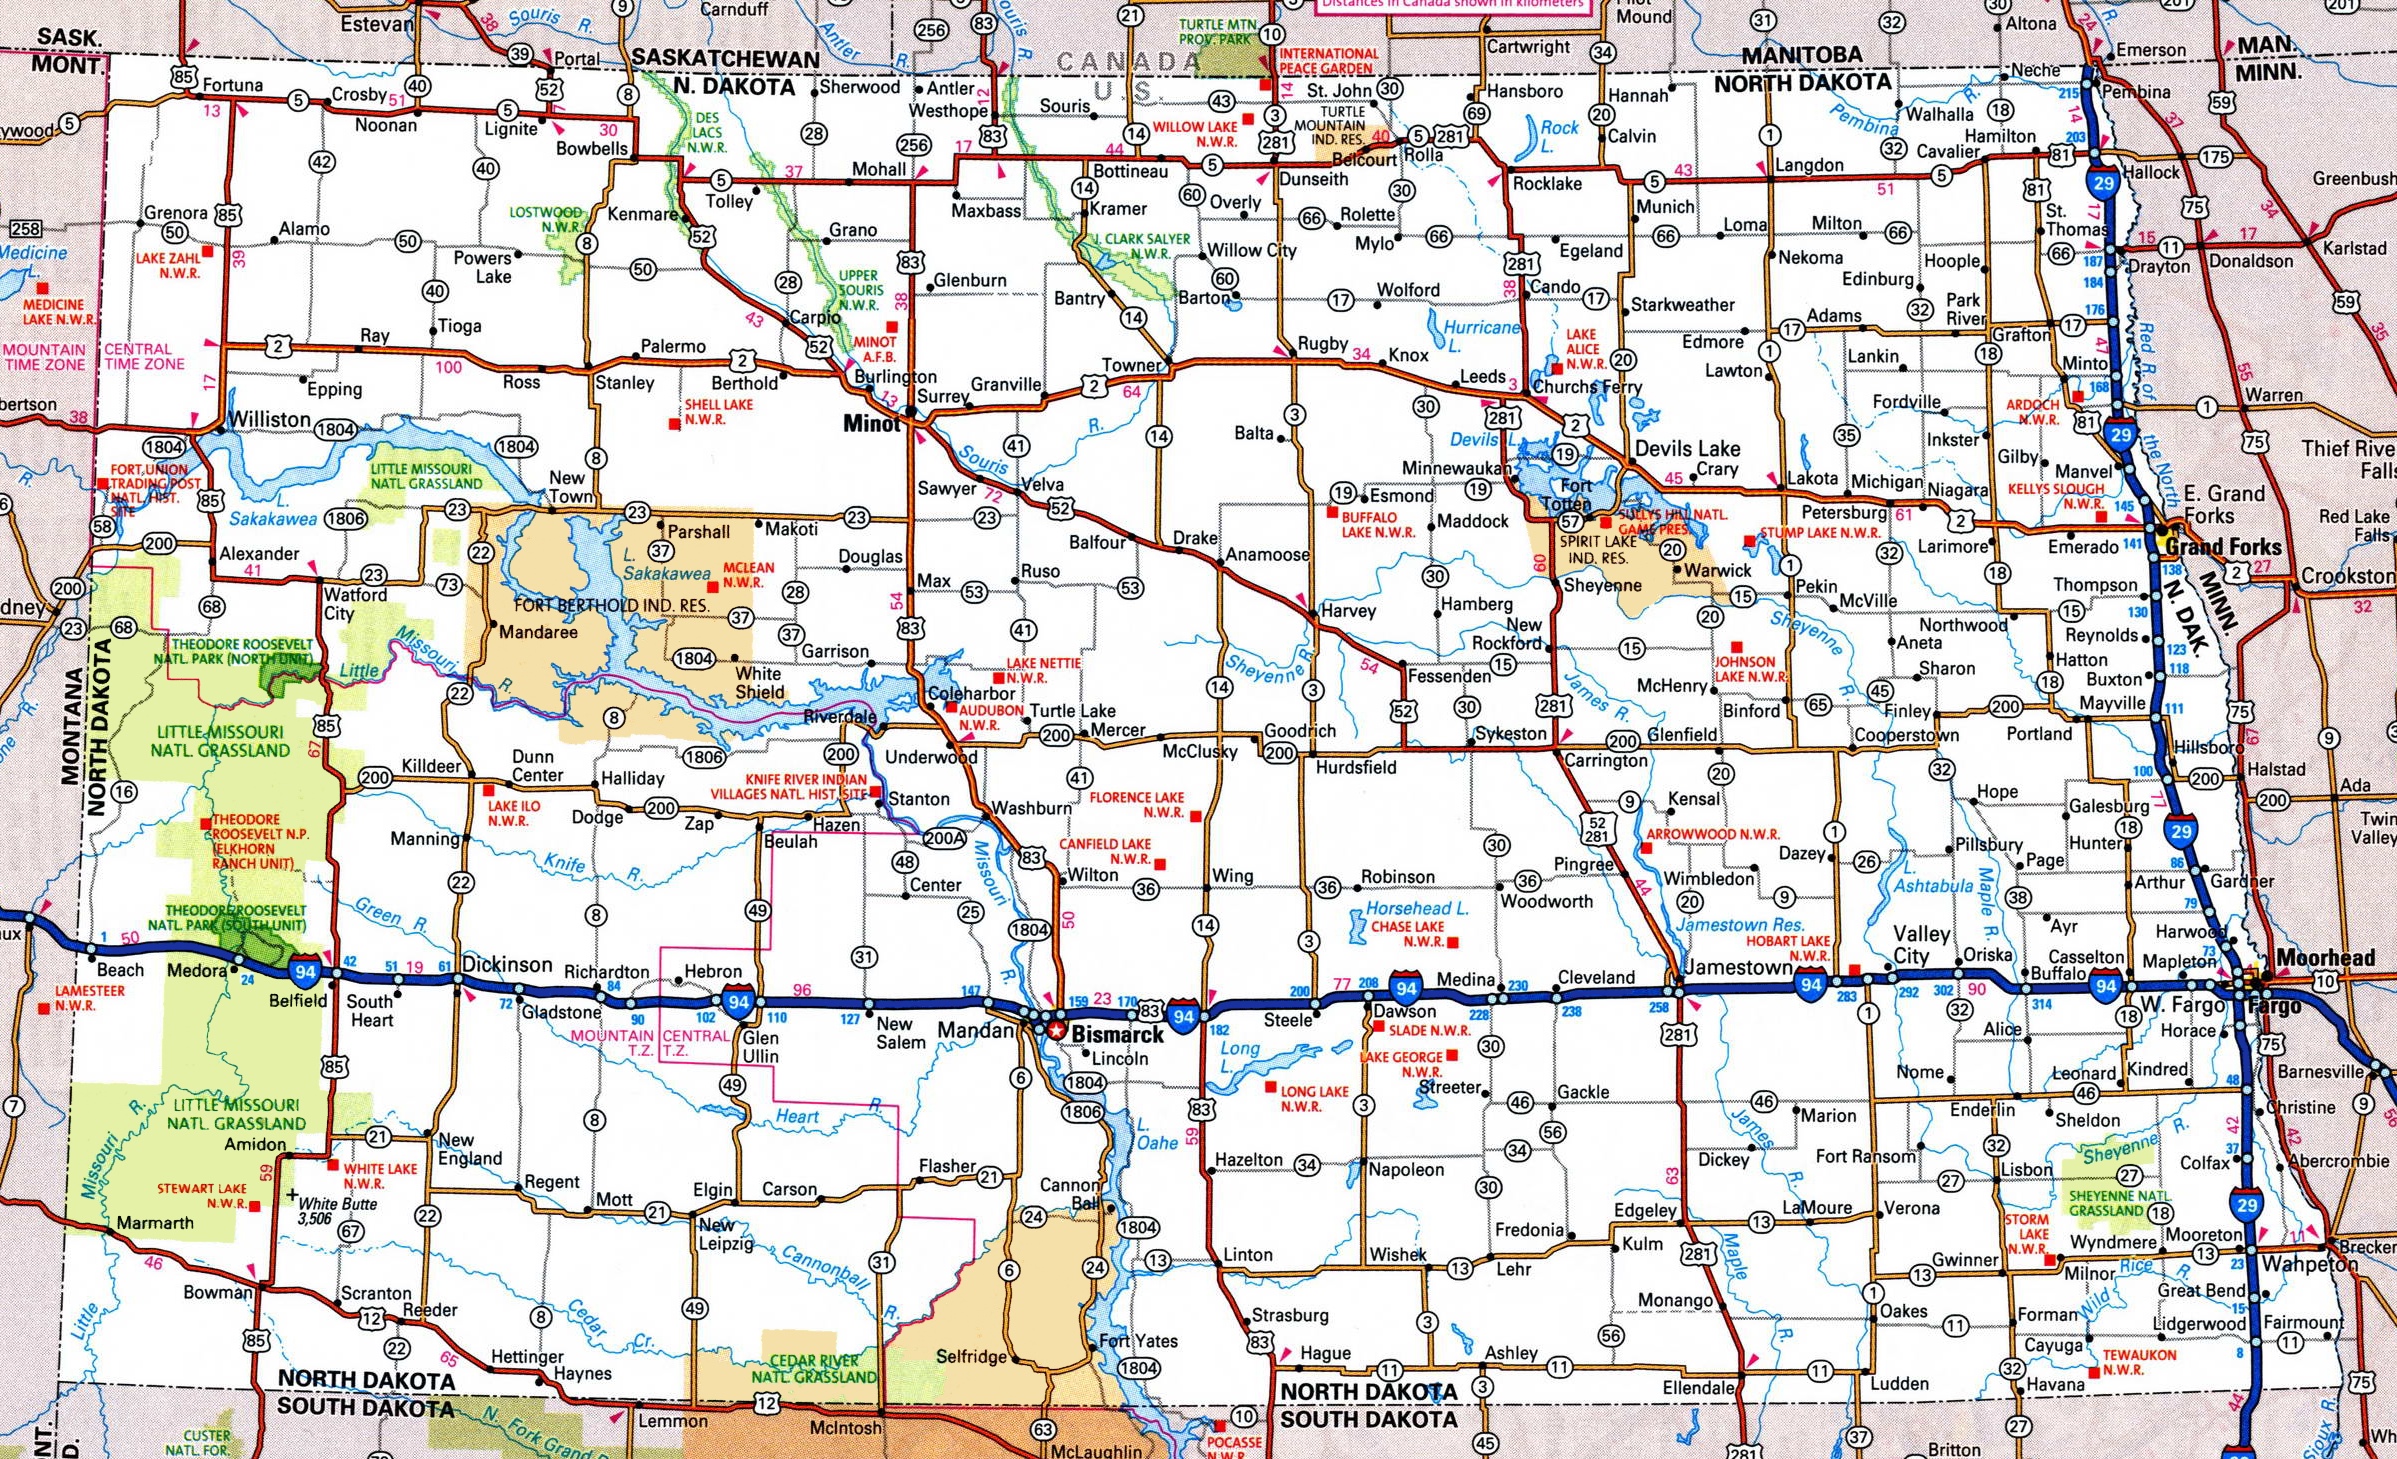 North Dakota road map